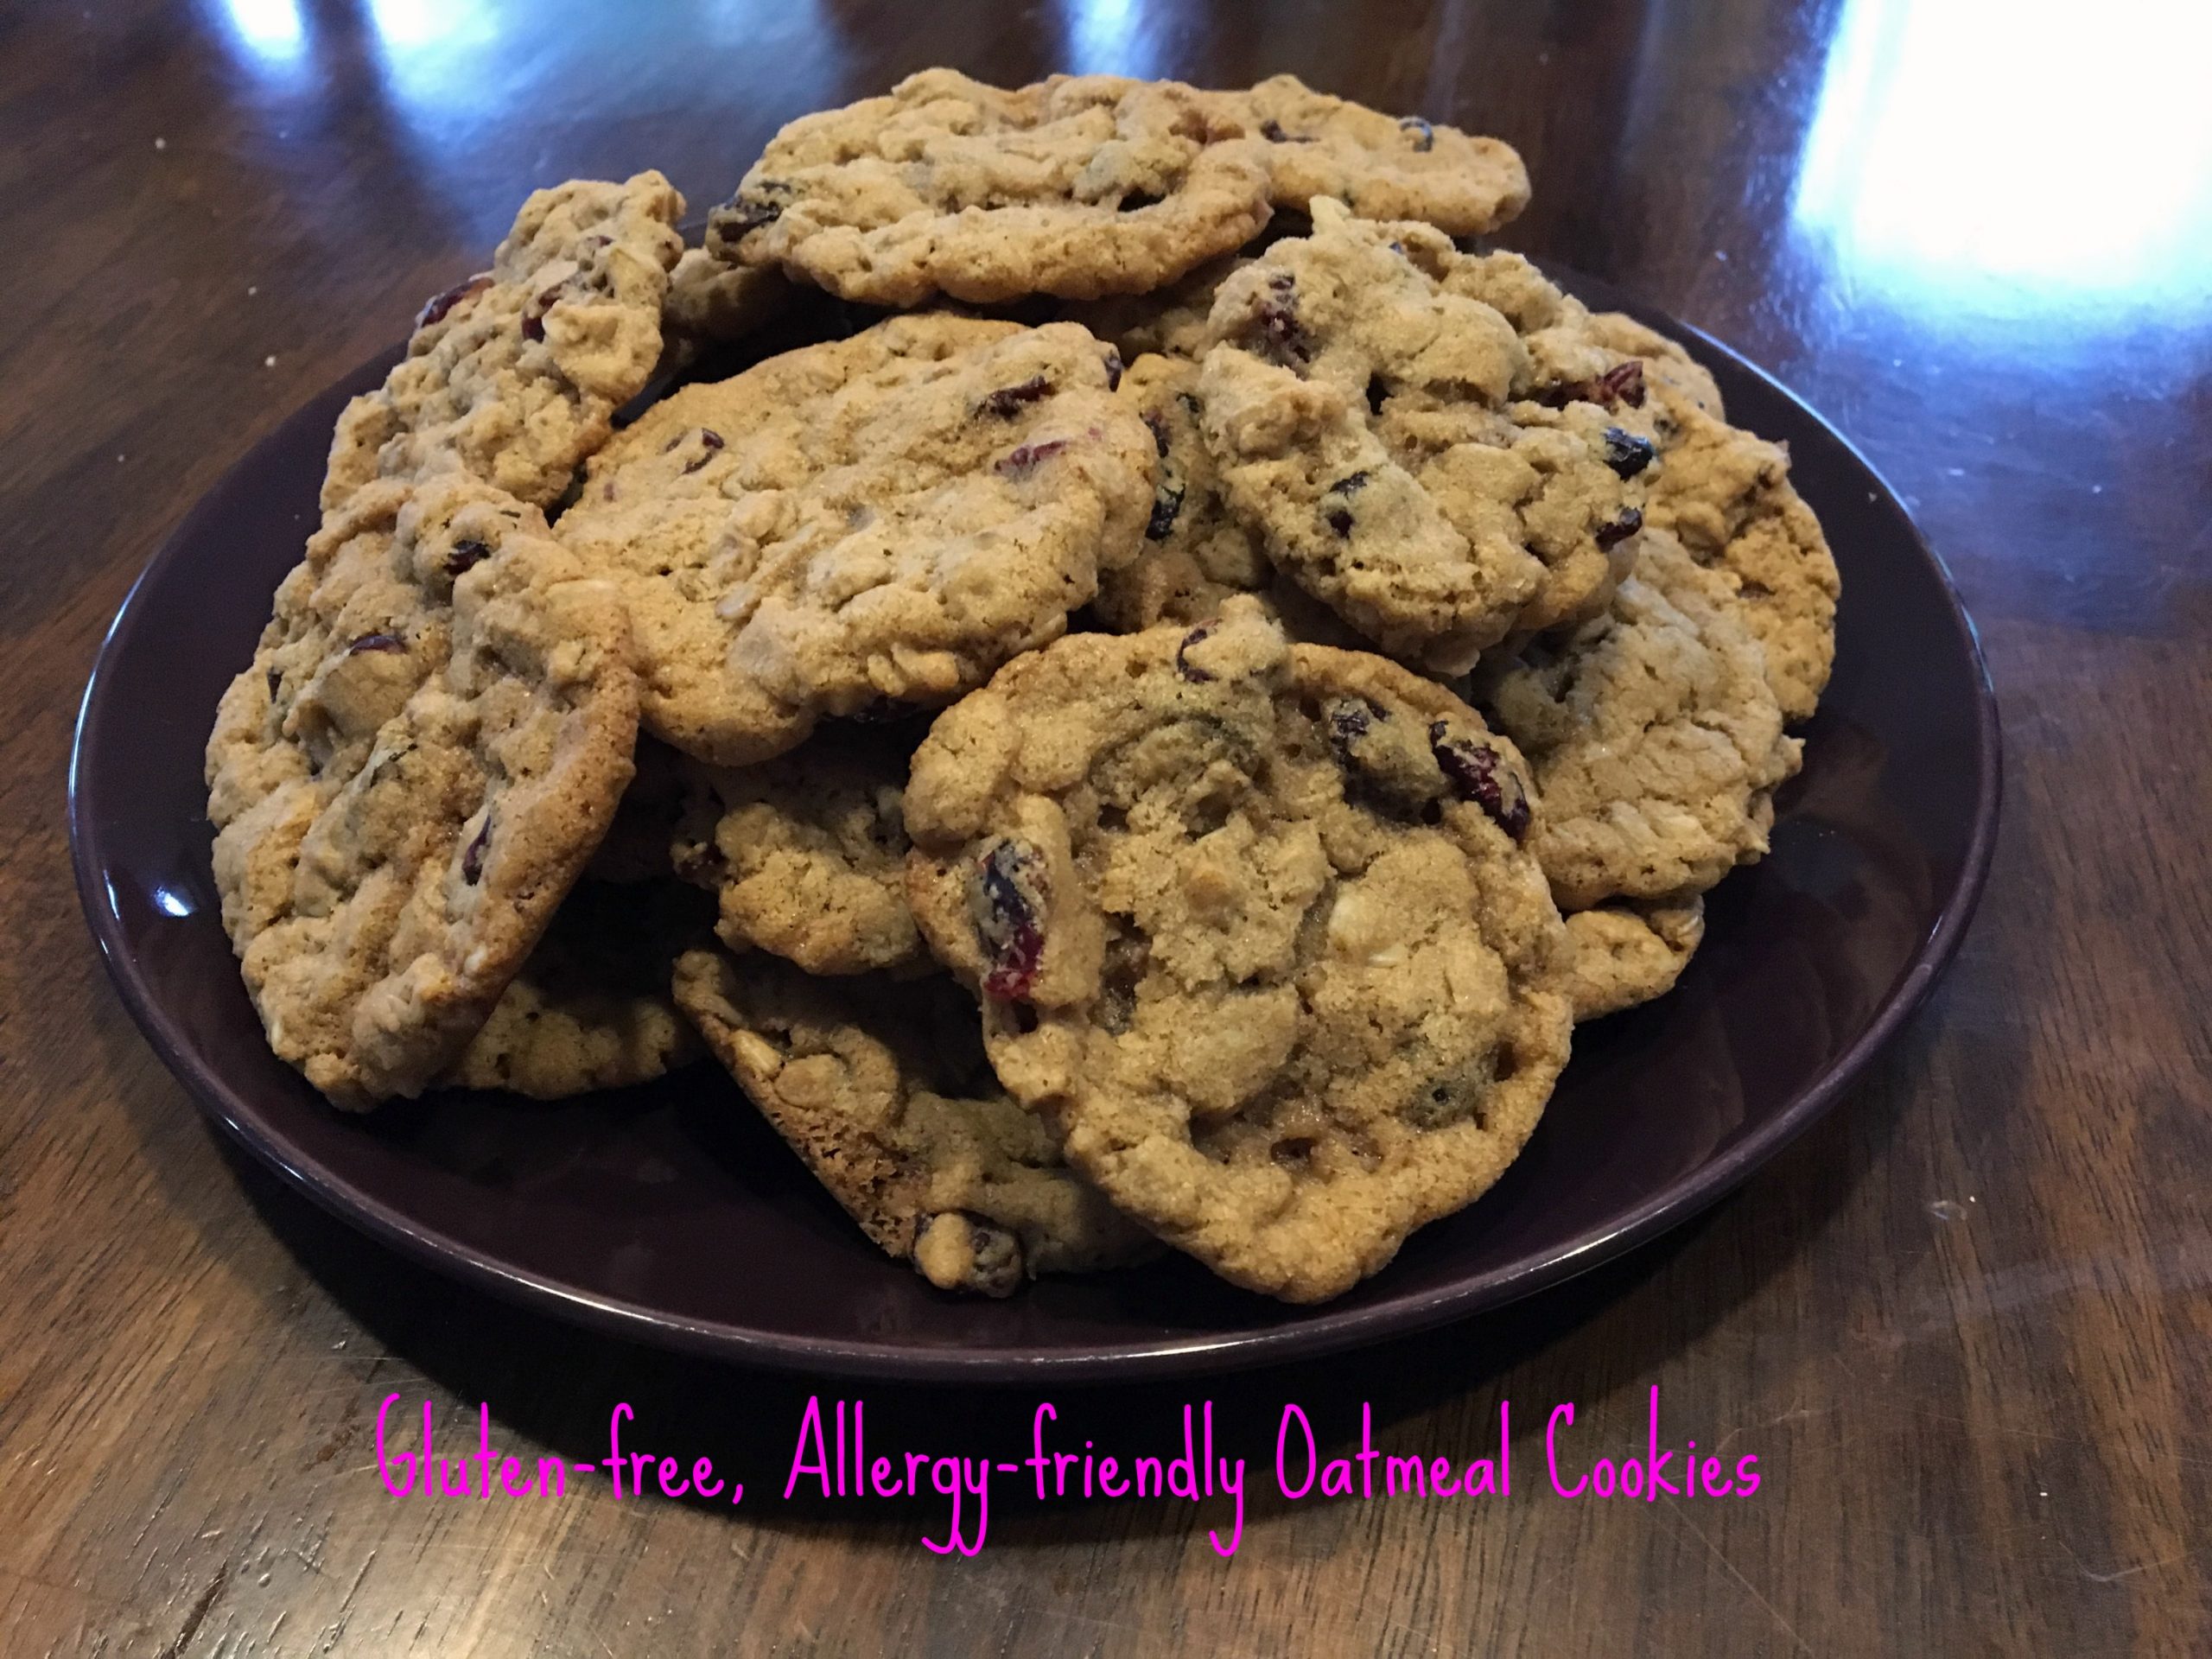 Gluten-free, Allergy-friendly Oatmeal cookies